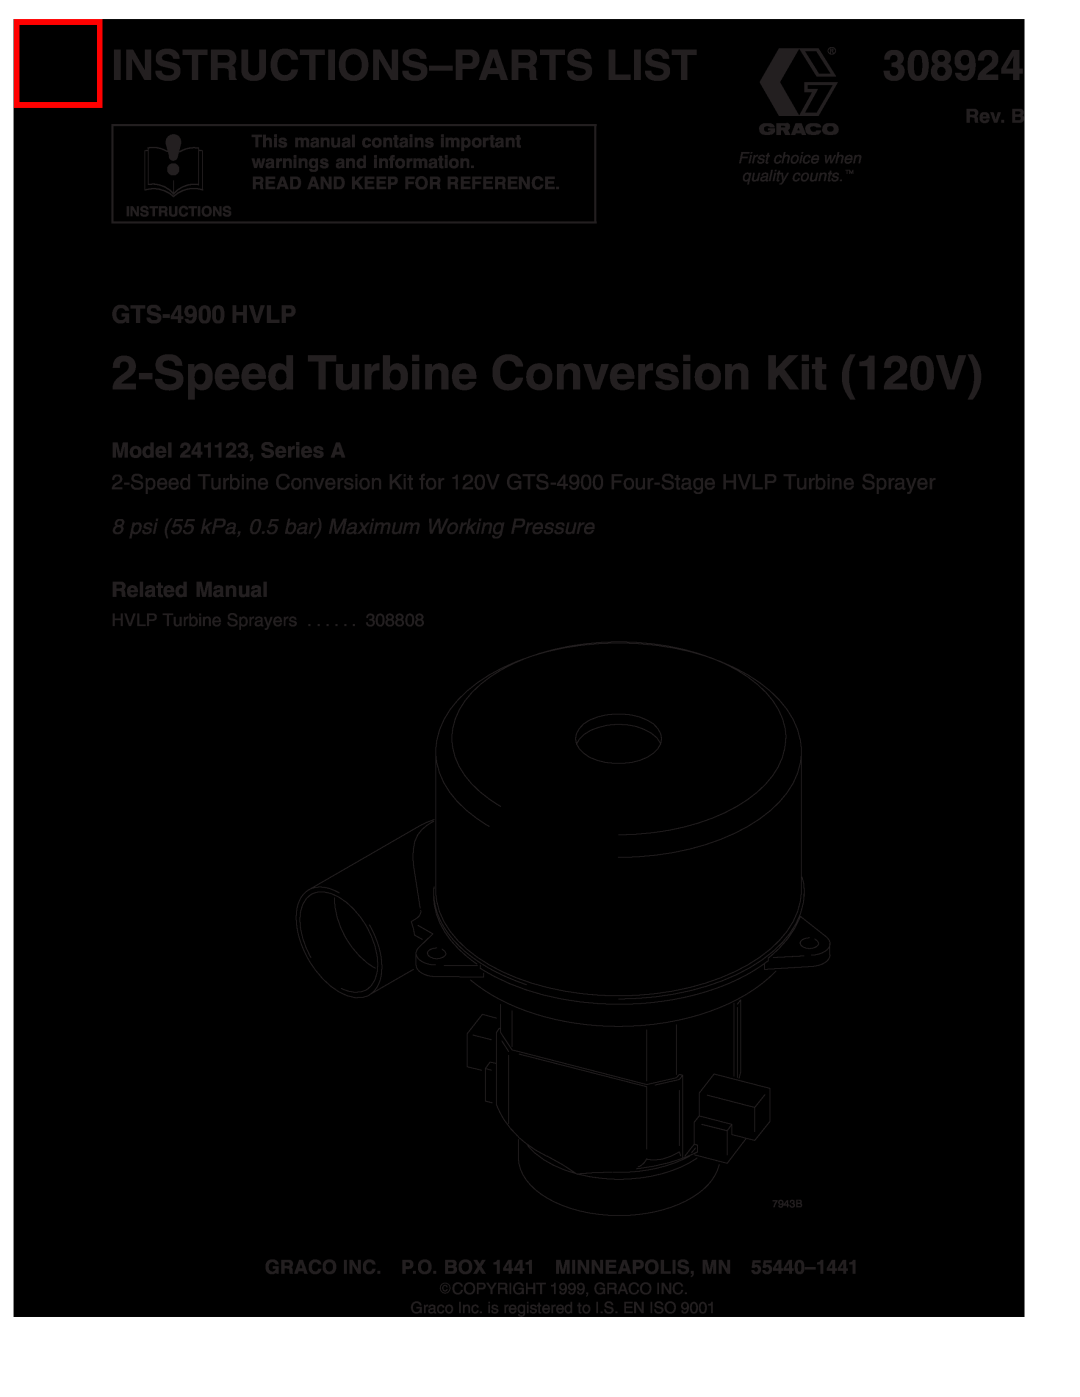 Graco 241123 manual Instructions-Partslist, 308924, Rev. B, SpeedTurbine Conversion Kit, GTS-4900HVLP, Related Manual 